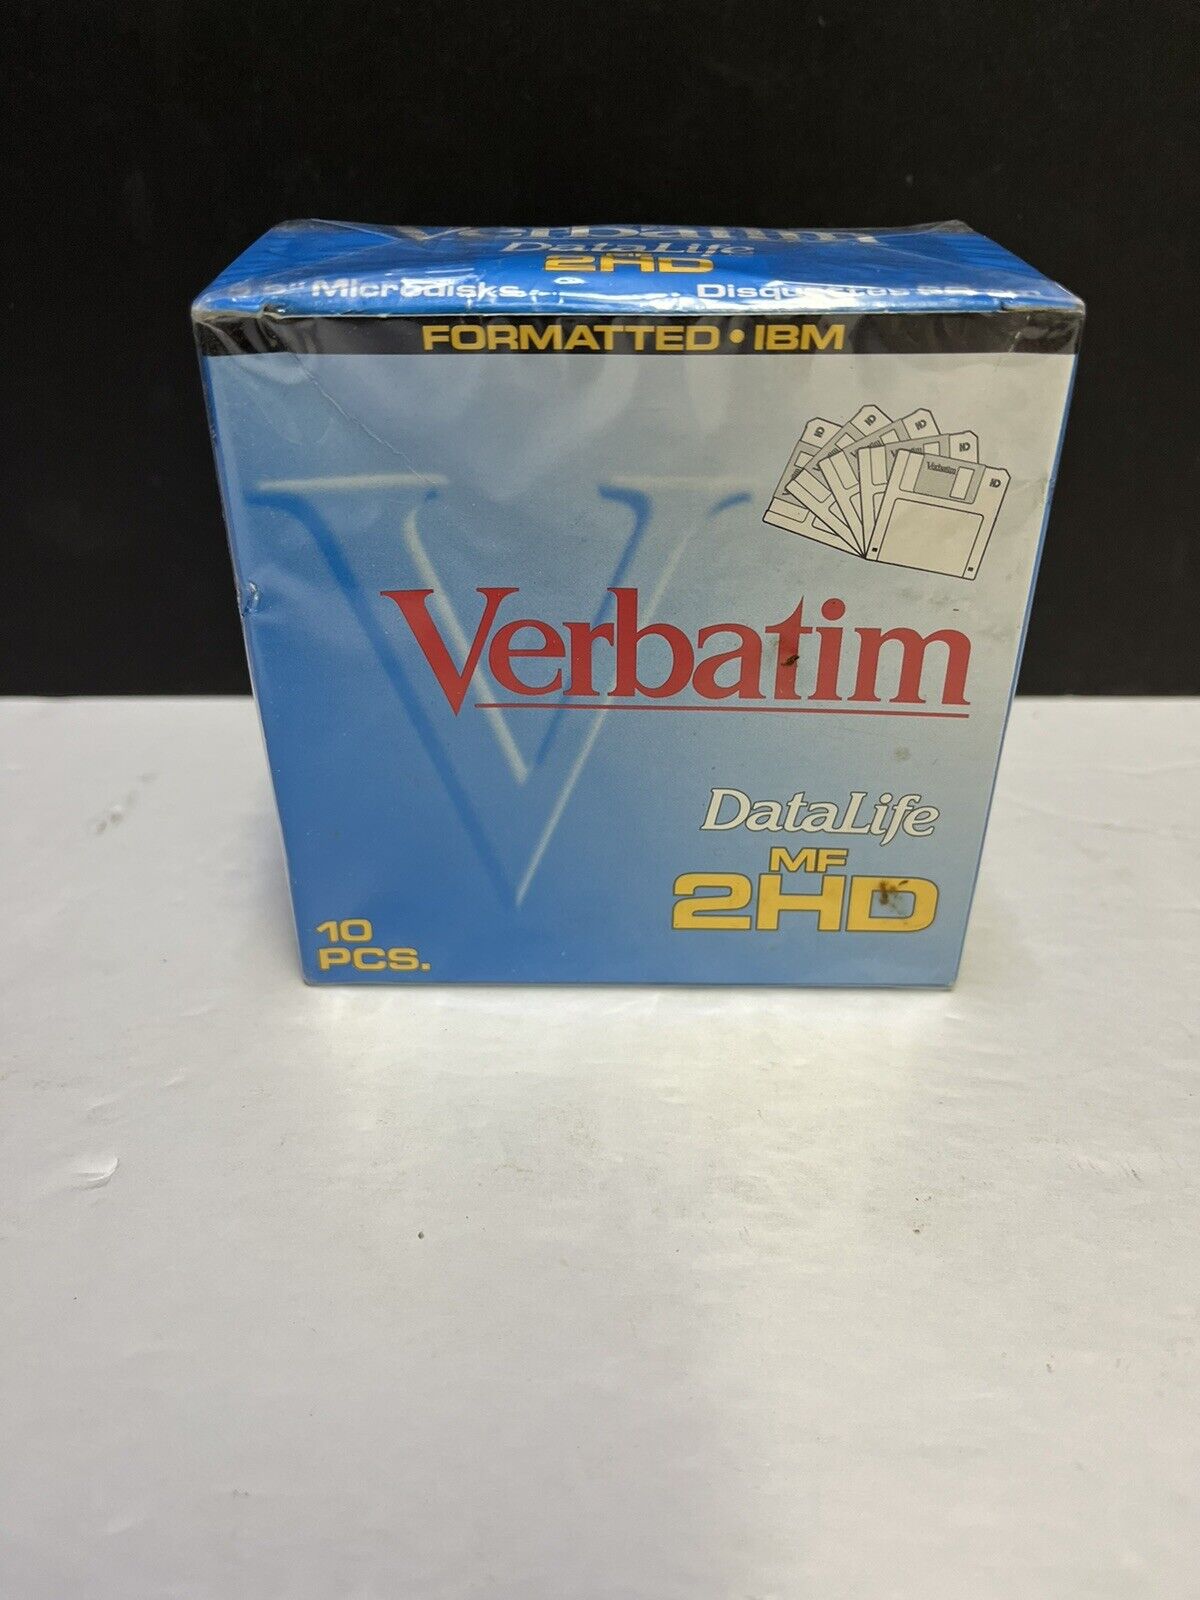 Verbatim Formatted IBM MF 2HD 3.5” Microdisks Datalife  10 Pack - New